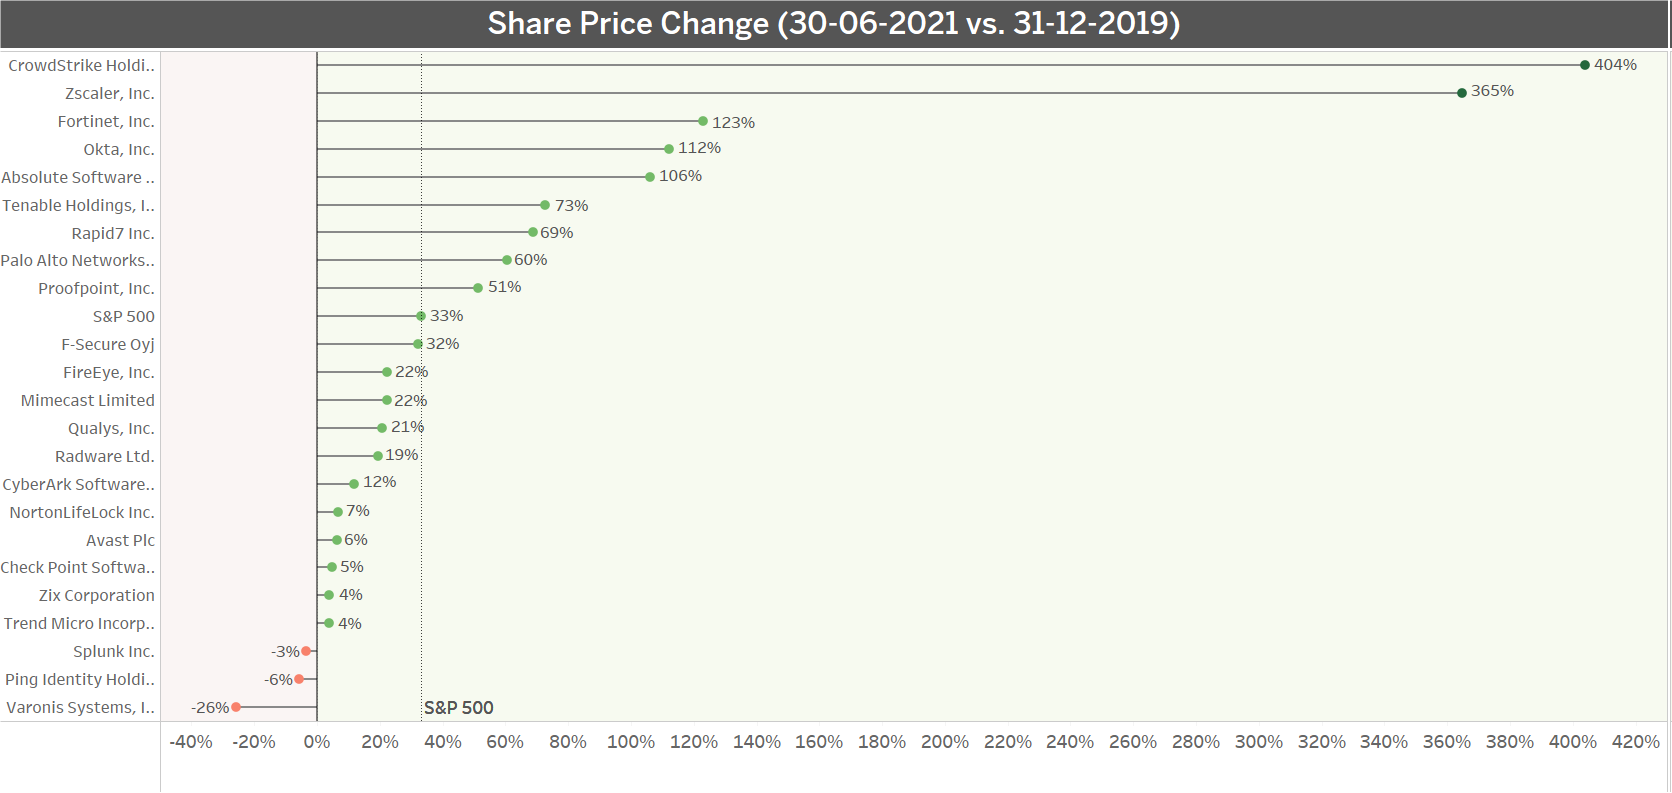 Share price change (30-06-2021 vs 31-12-2019)